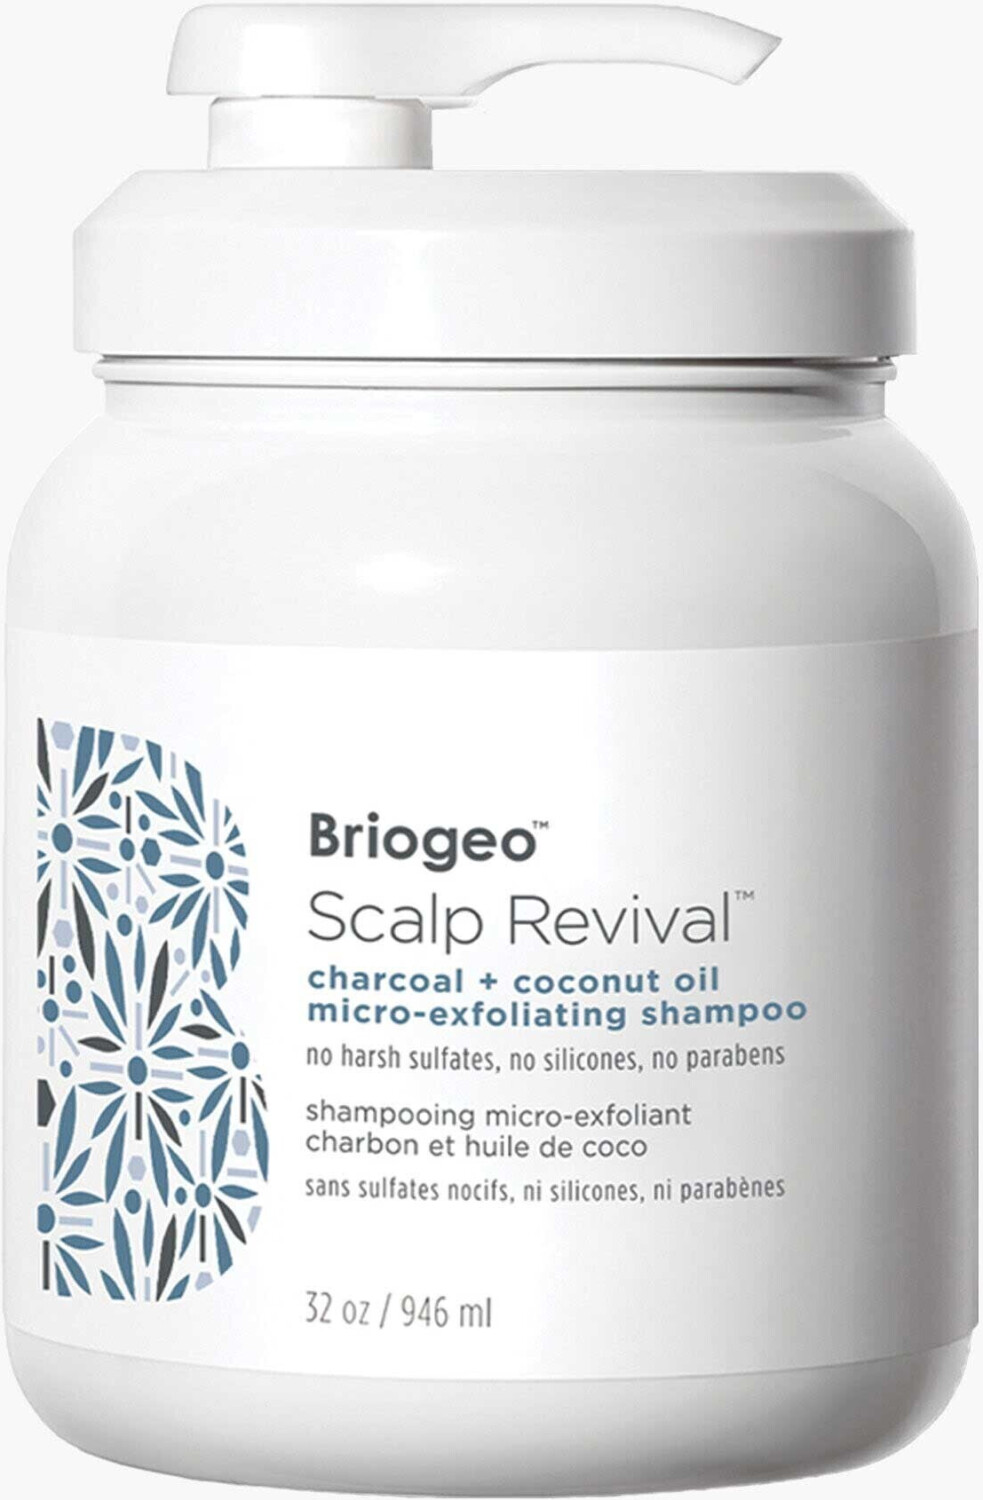 Photos - Hair Product Briogeo Hair Briogeo Scalp Revival™ Charcoal + Coconut Oil Micro-exfoliati